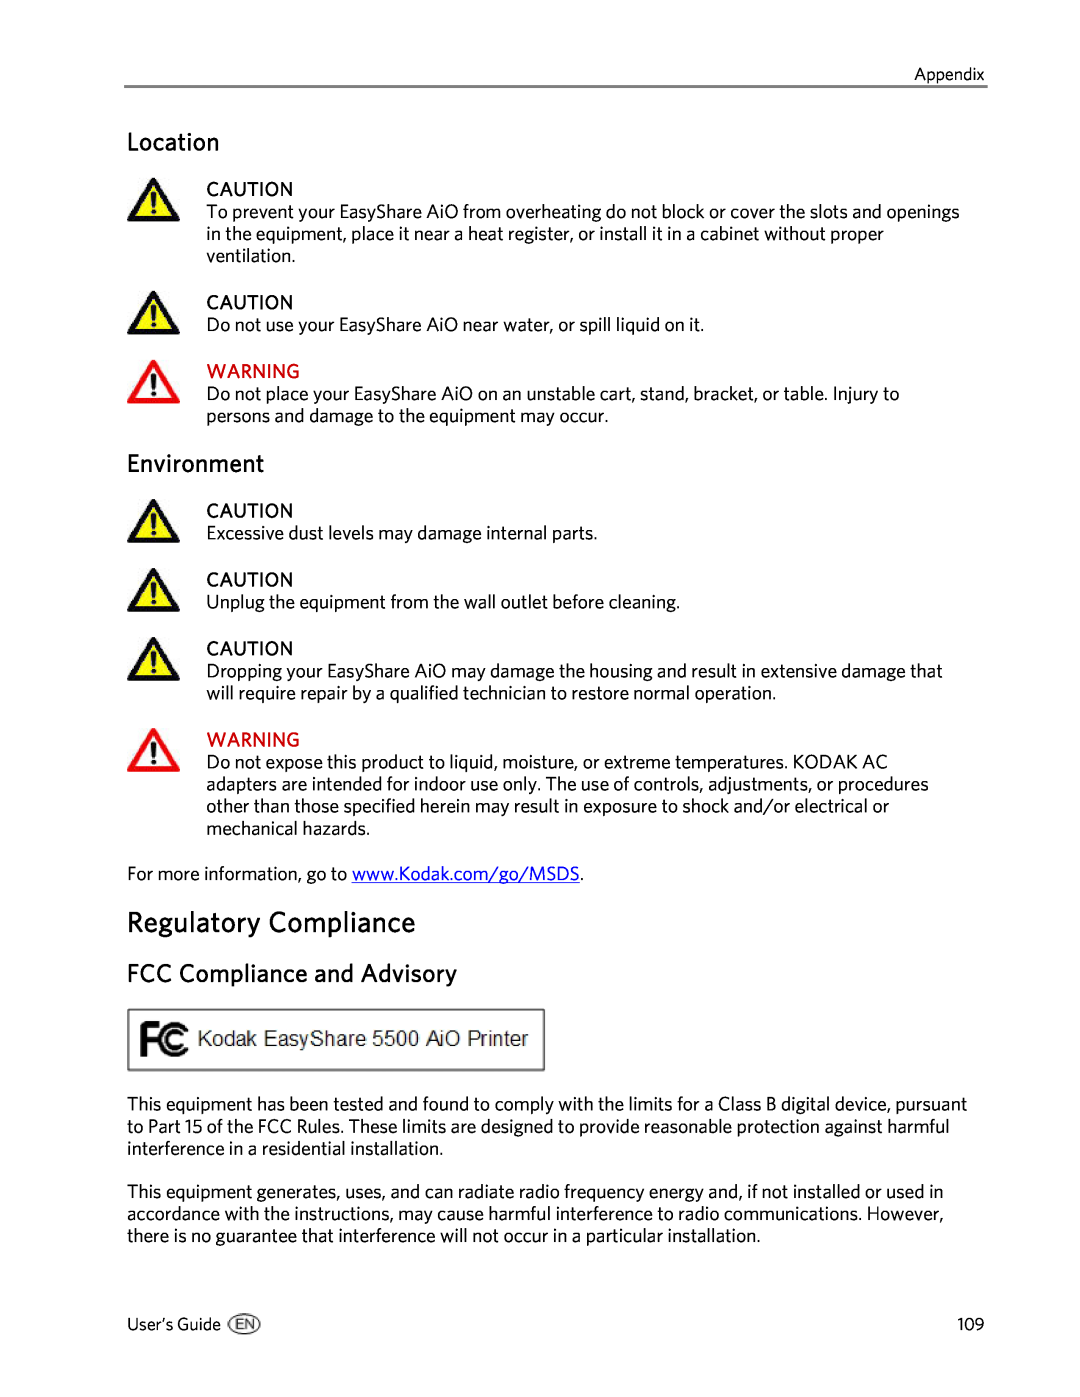 Kodak 5500 manual Regulatory Compliance, Location, Environment, FCC Compliance and Advisory 